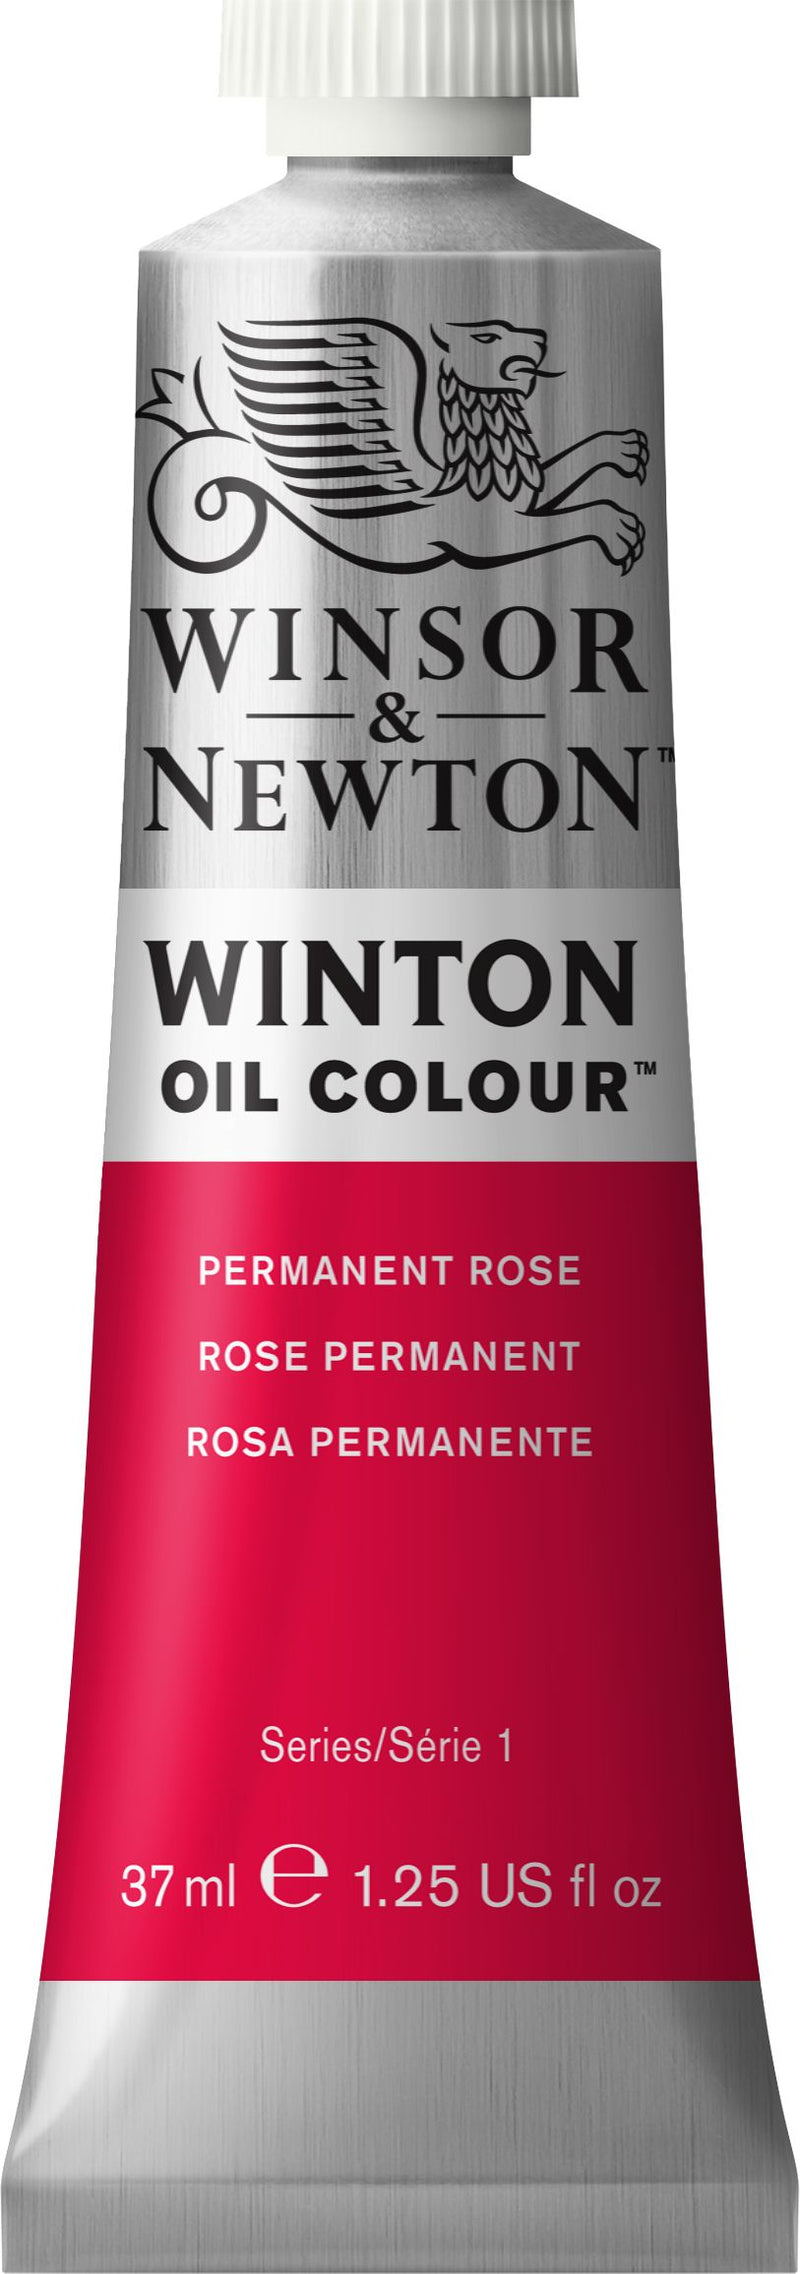 Winton Oil Colour Permanent Rose - 37ml tube